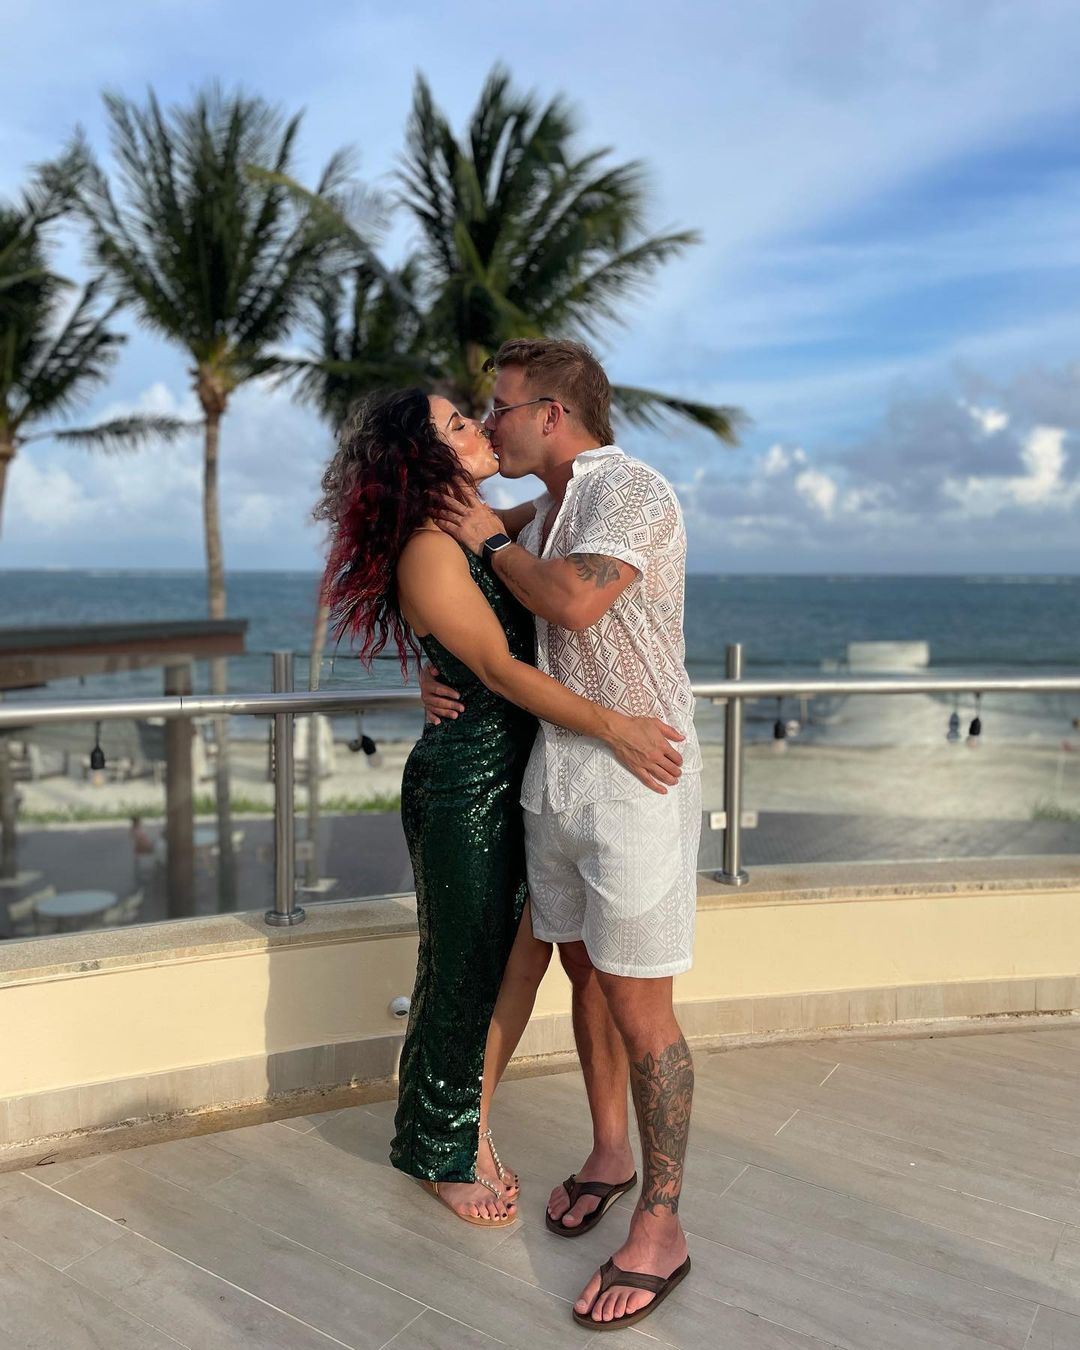 Cara Maria Sorbello and her boyfriend, Paulie Calafiore, during their vacation in Cancun, Mexico